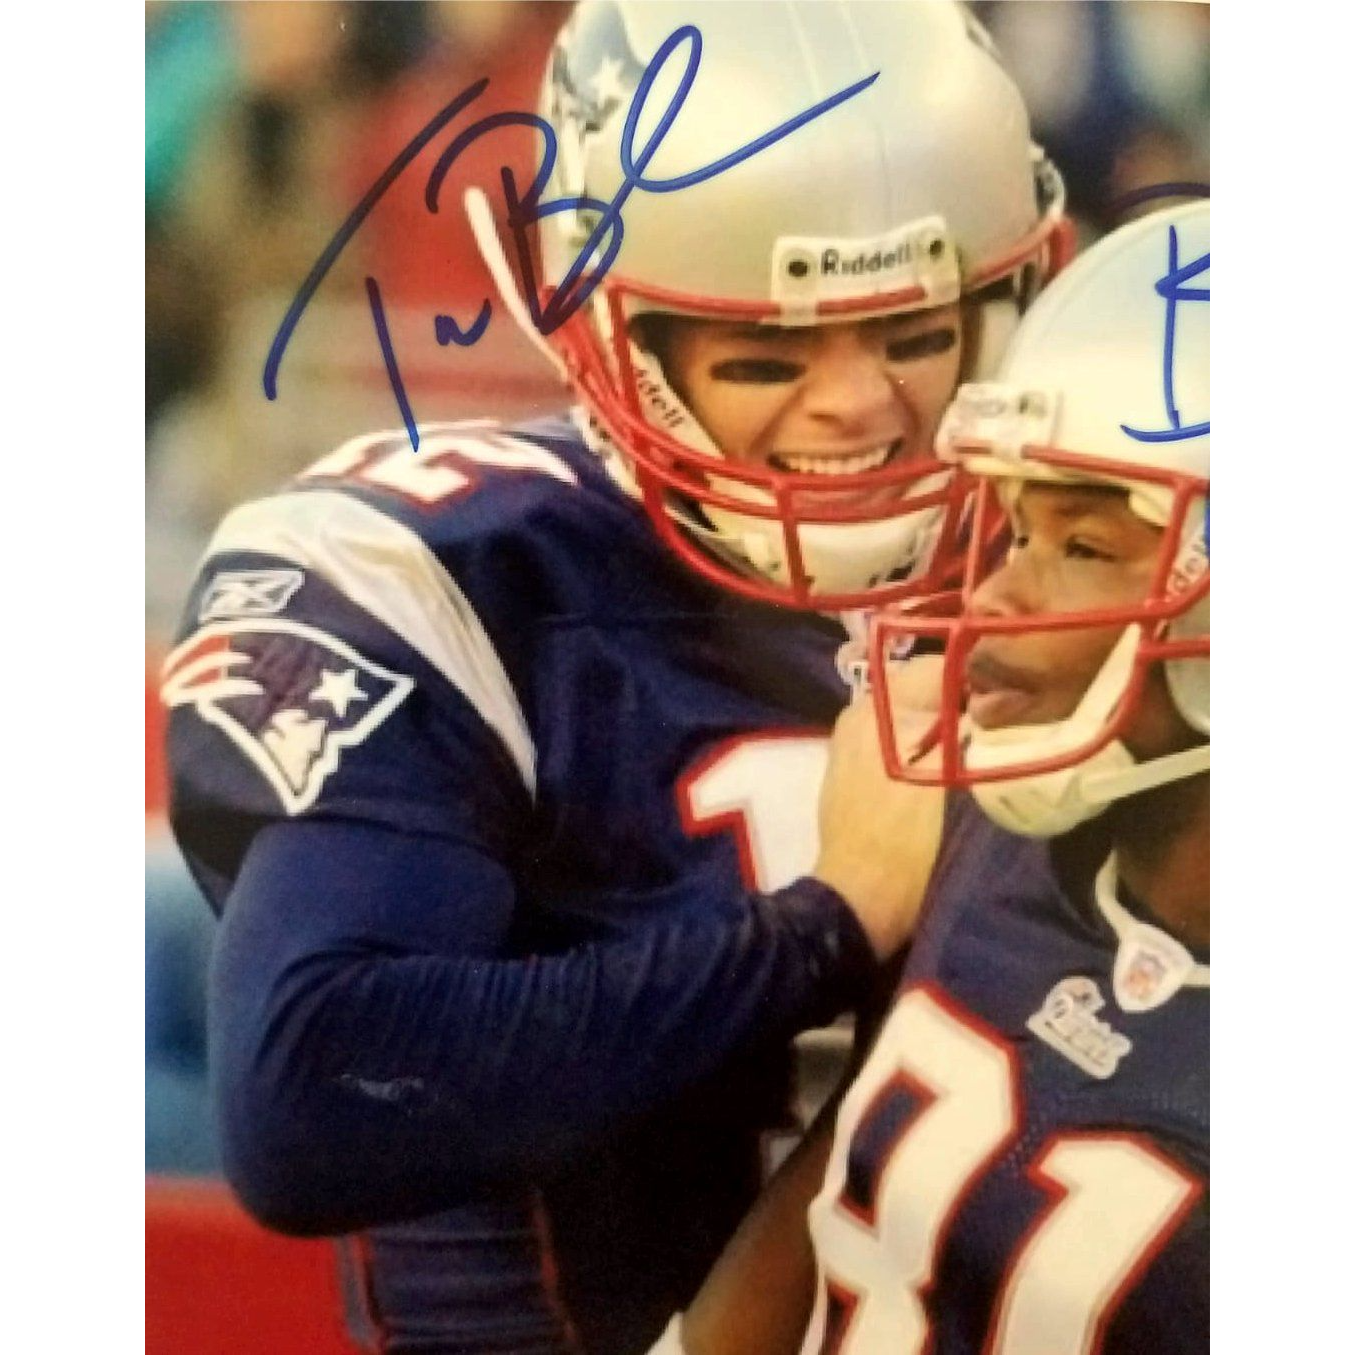 Tom Brady and Bethel Johnson 8x10 photo signed